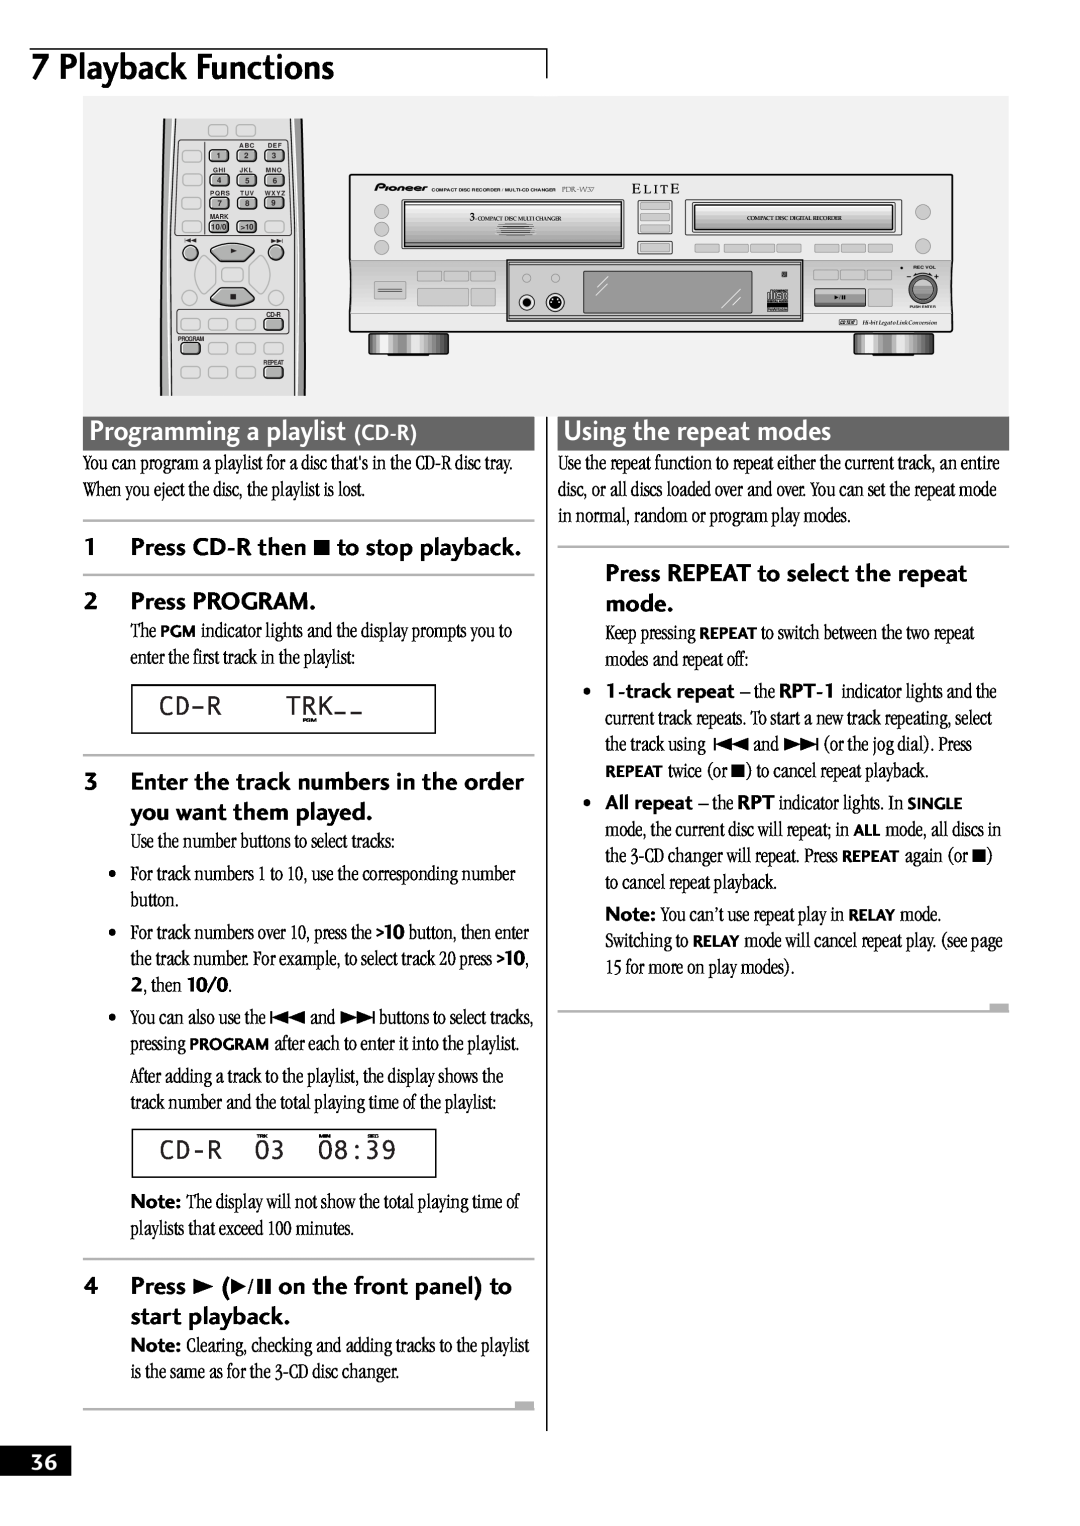 Pioneer PDR-W37 manual Playback Functions, Programming a playlist CD-R, Using the repeat modes, Cdðr Trkpgm Ðð, CD-RO3, O8 